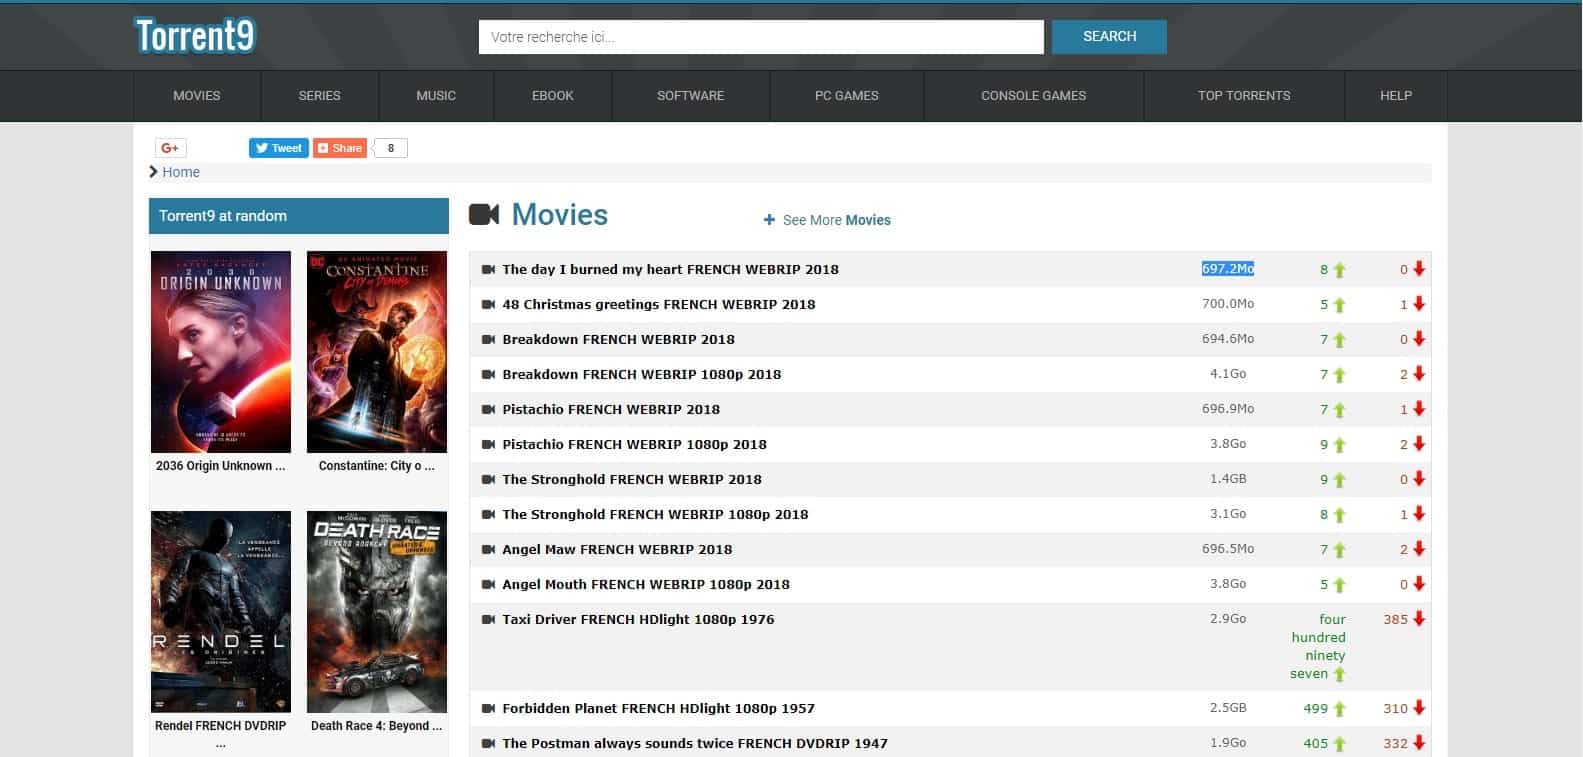 50 first dates movie torrent download